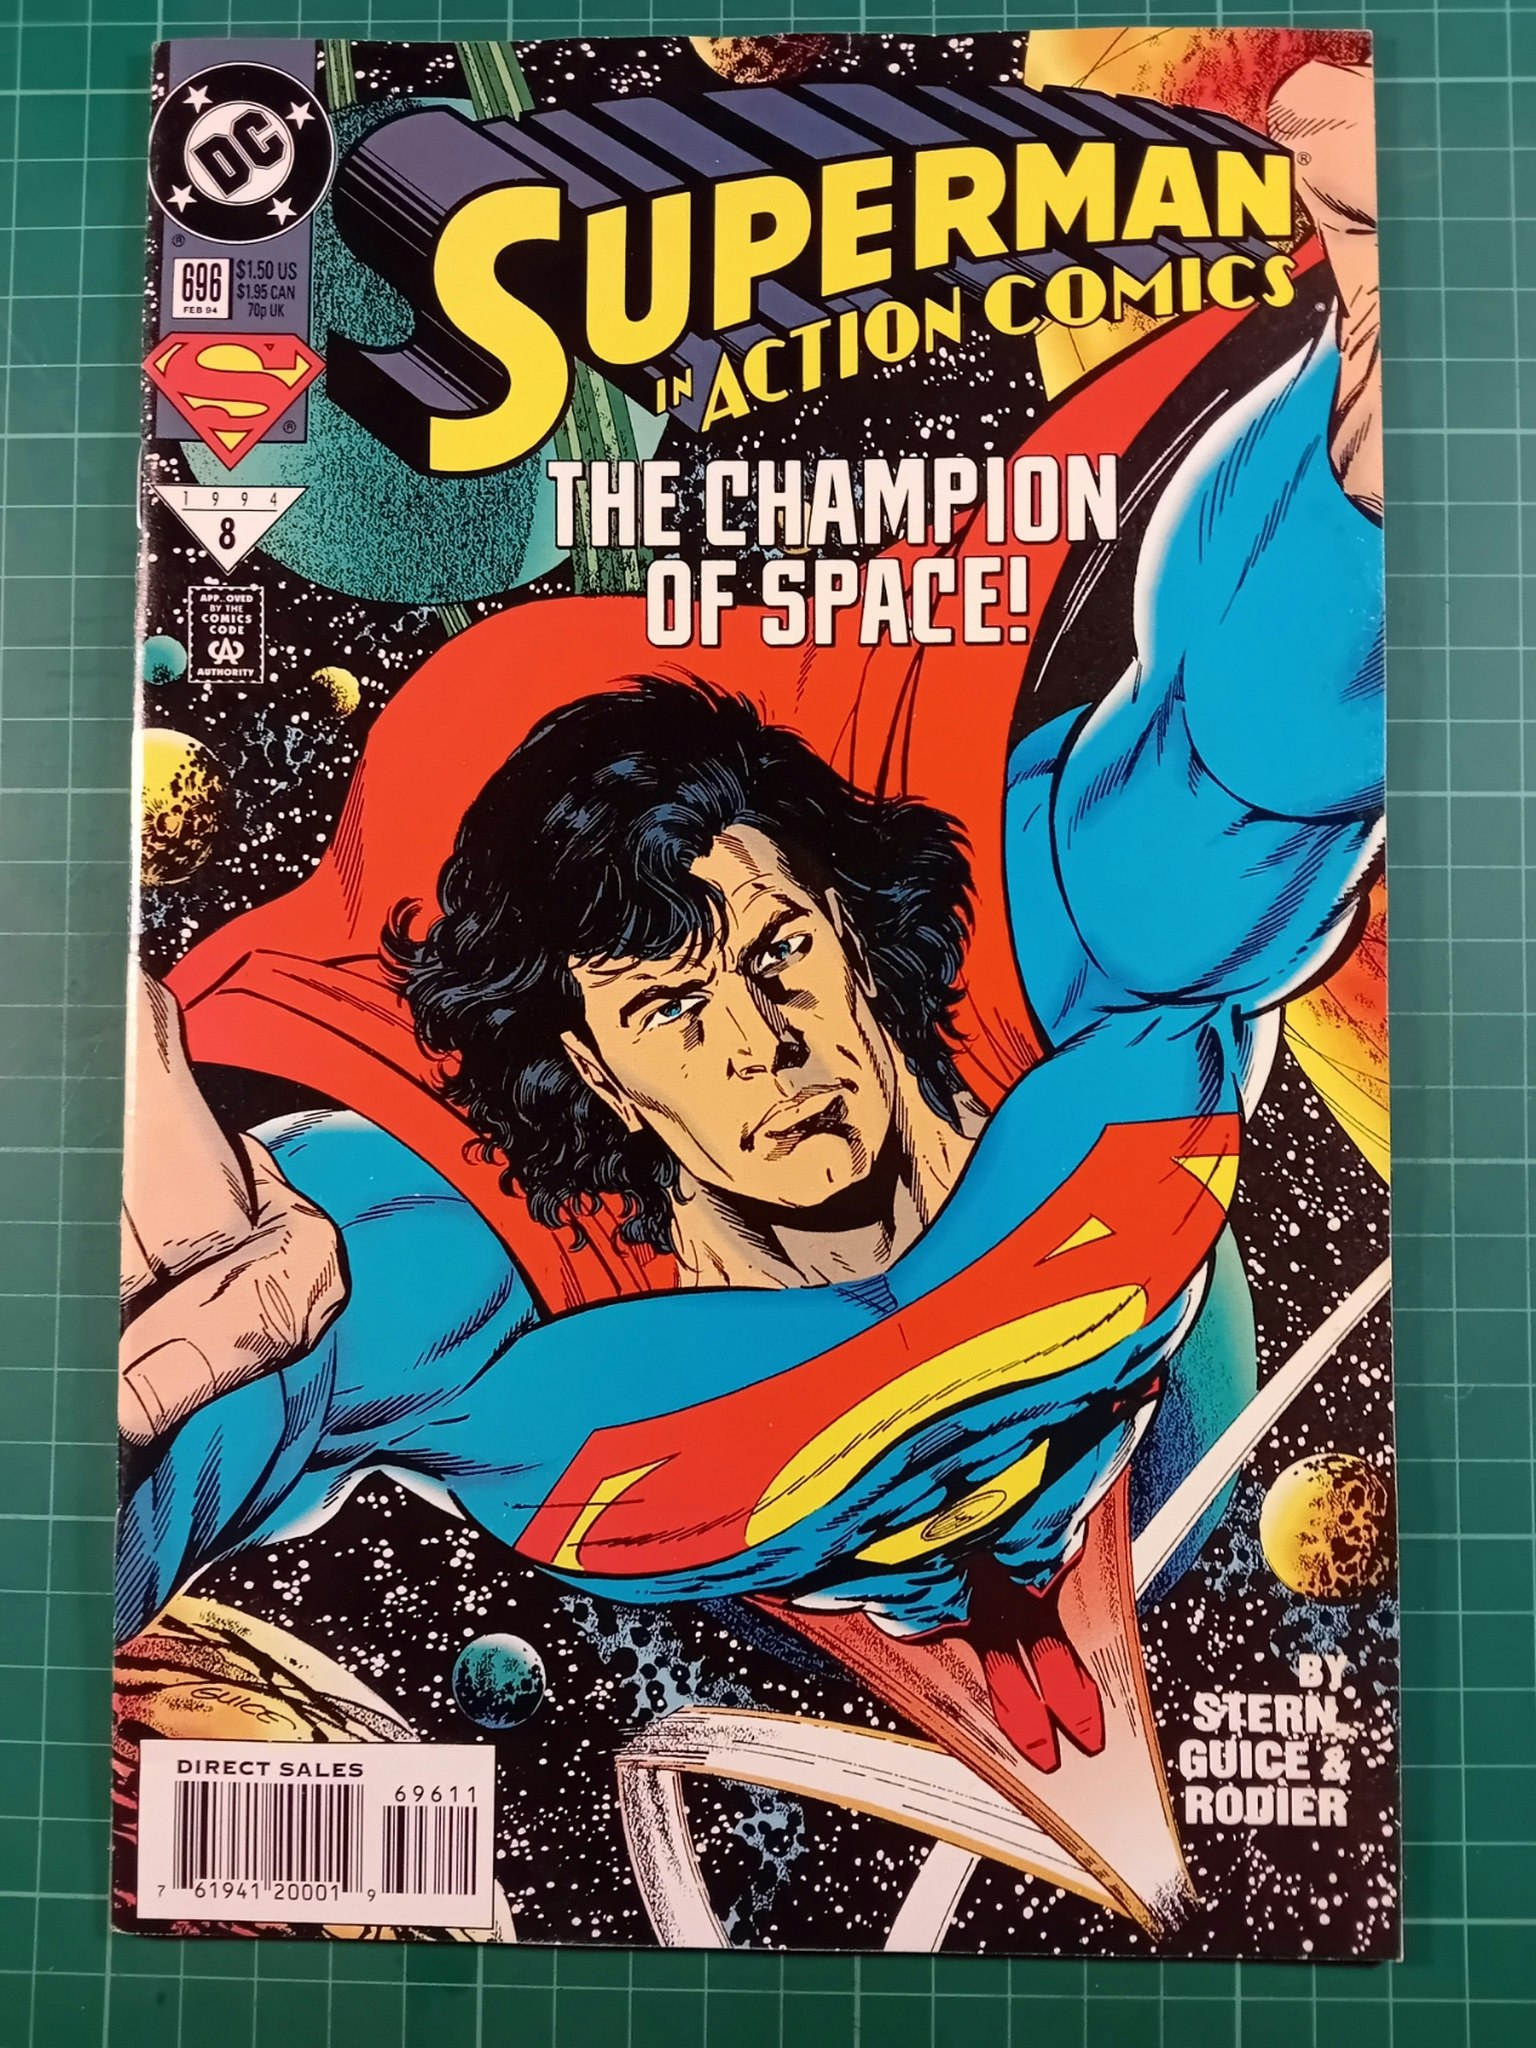 Superman in Action comics #696